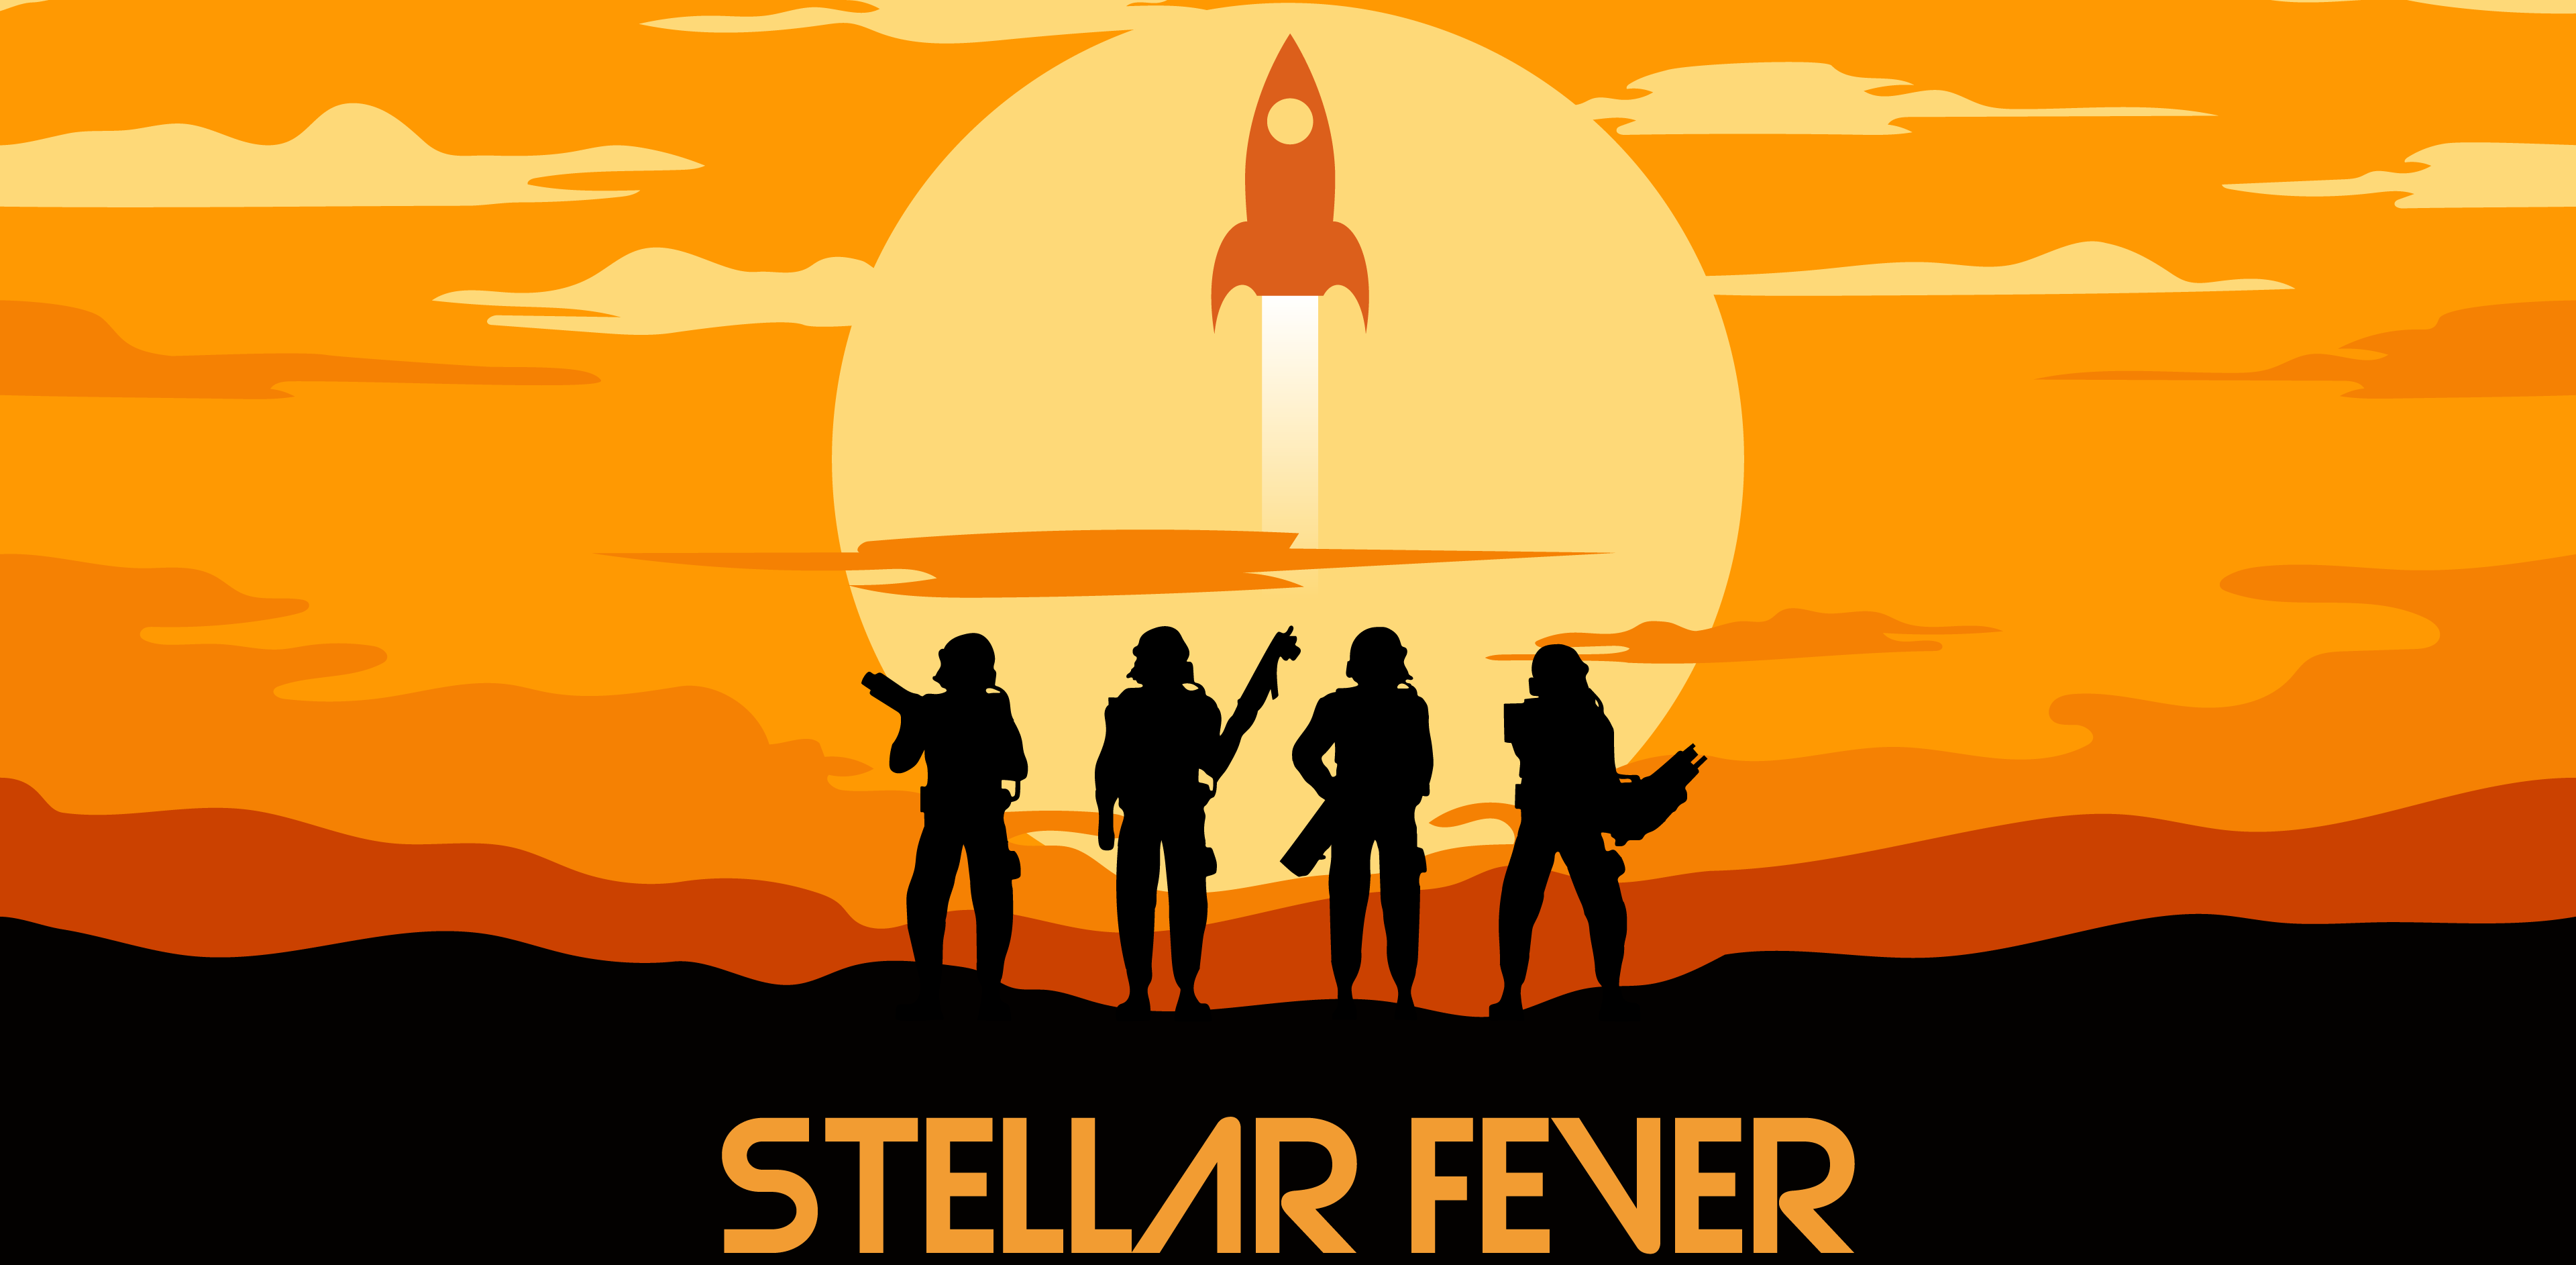 Stellar Fever